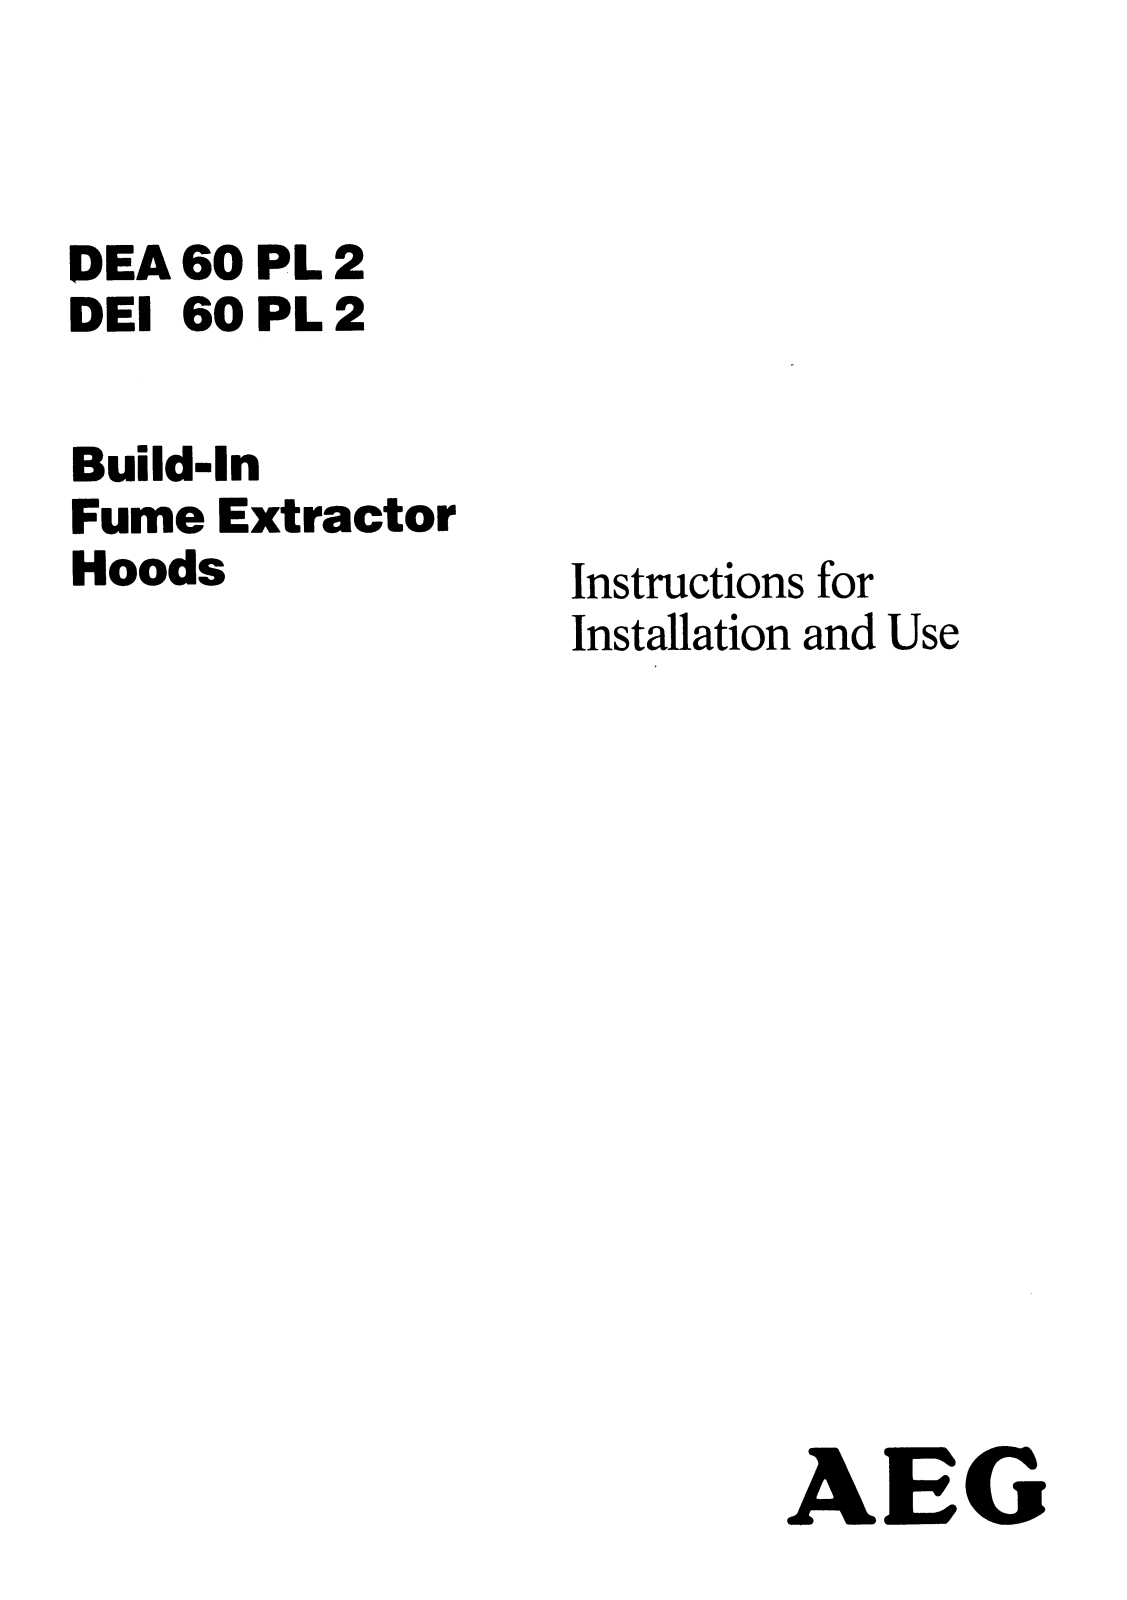 Aeg-electrolux DEA 60 PL2 D Manual